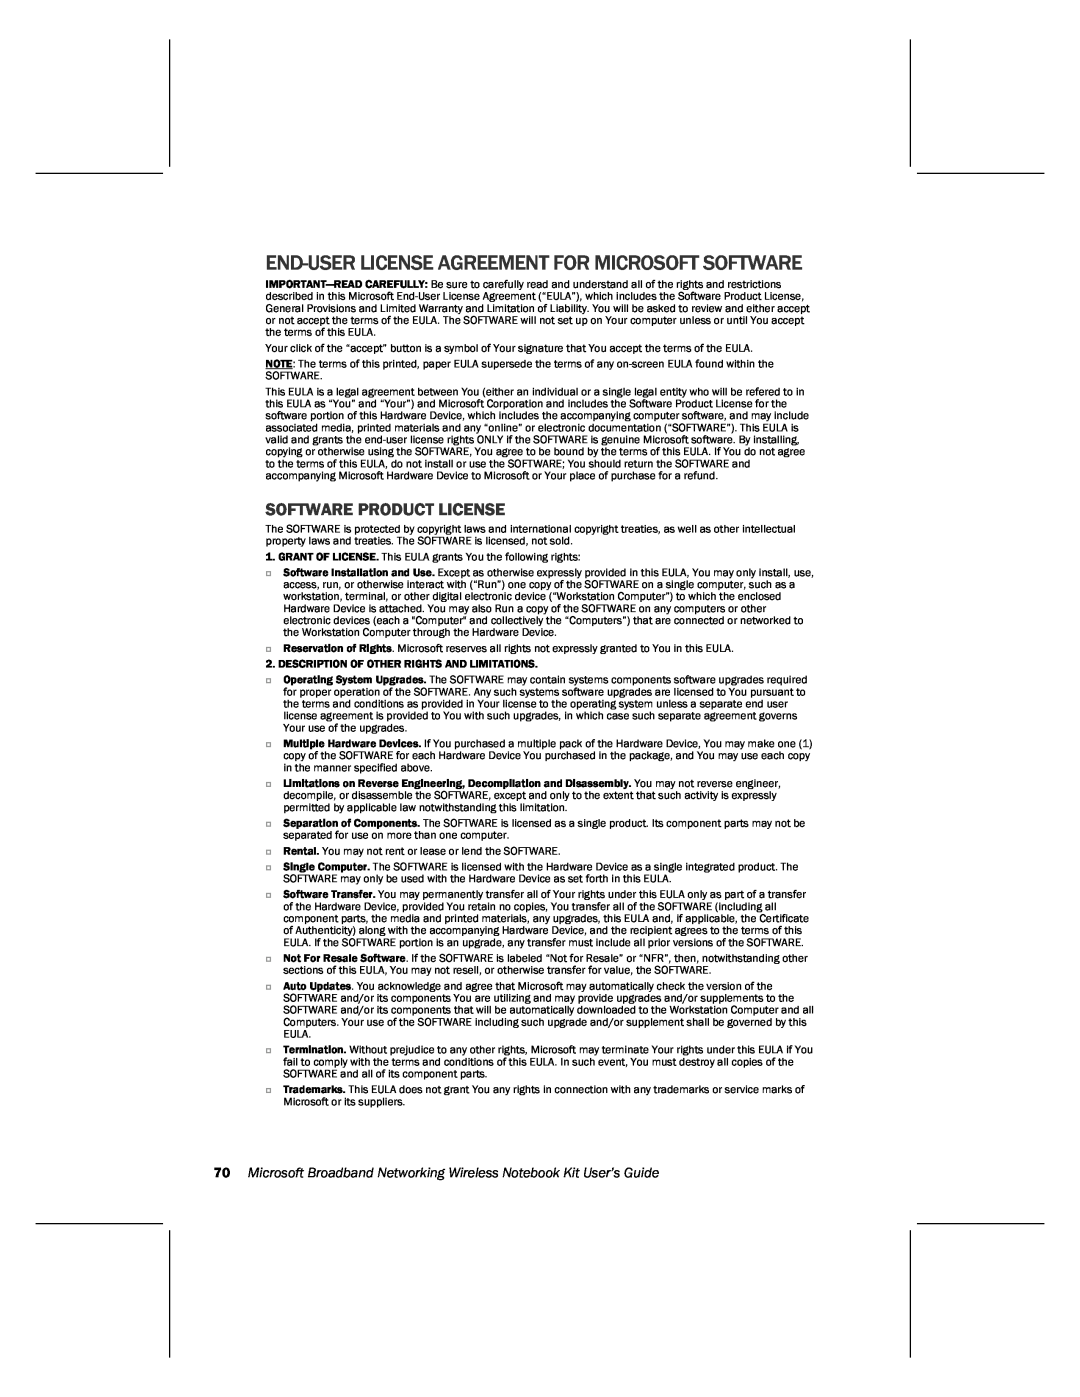 Microsoft MN-820 manual End-User License Agreement For Microsoft Software, Software Product License 